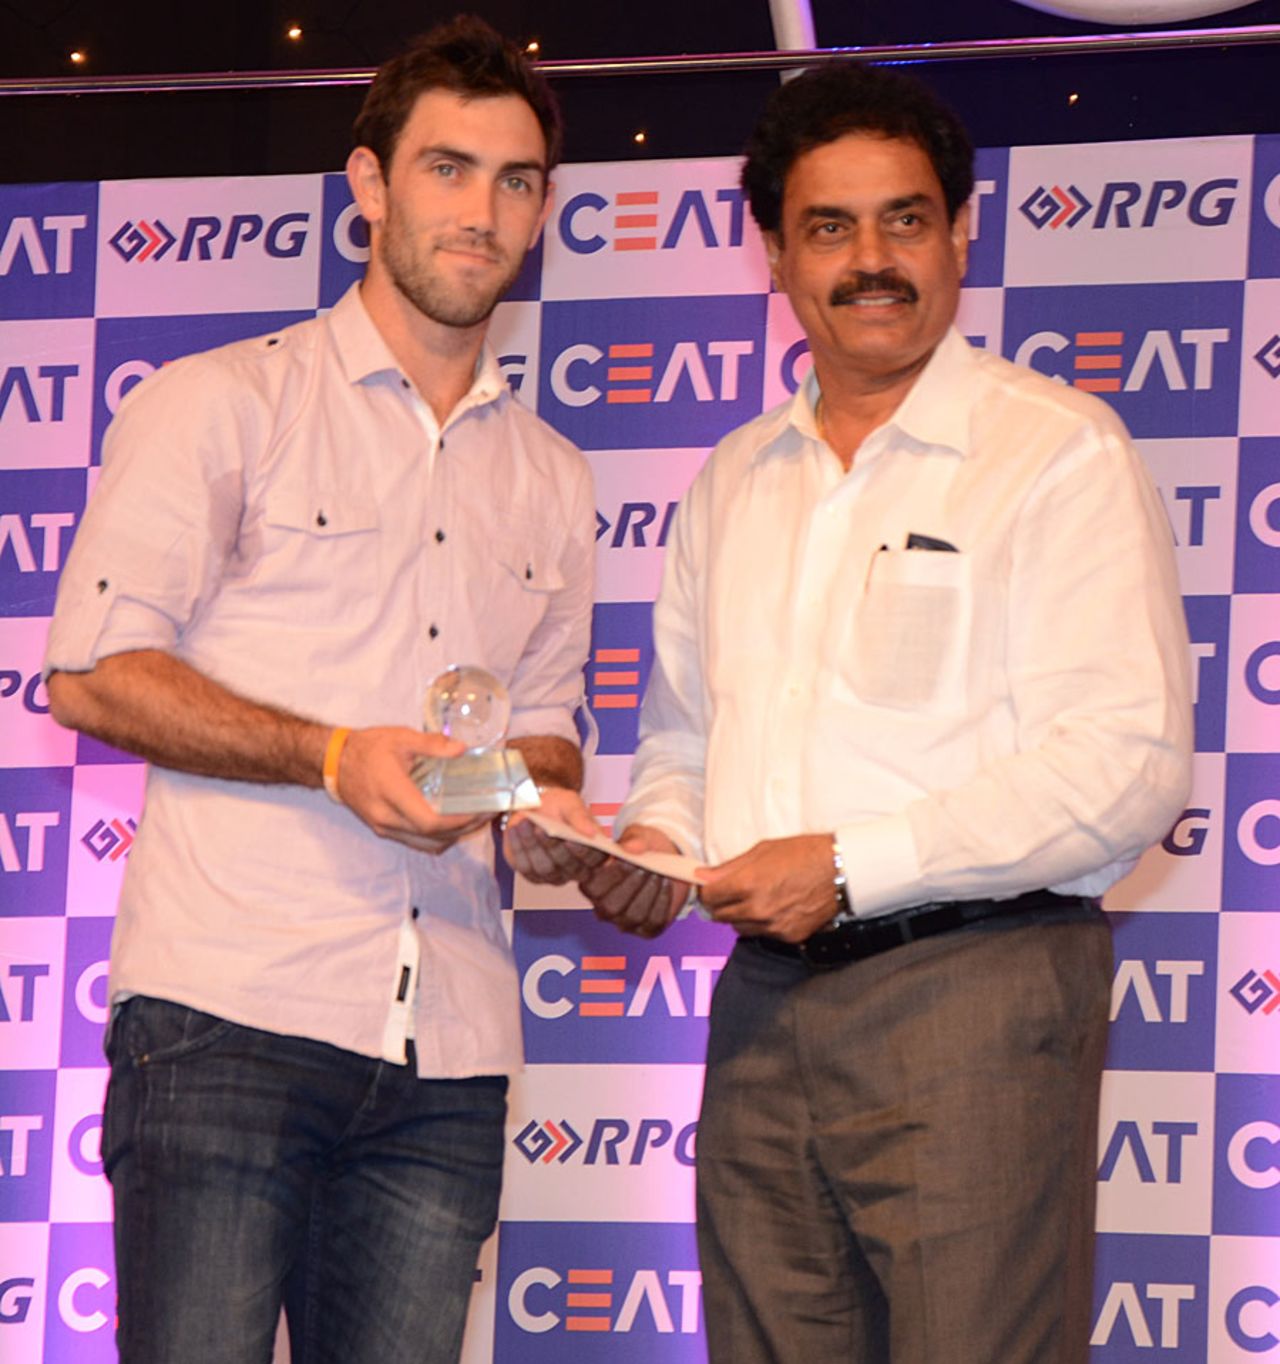 Glenn Maxwell receives the CEAT International Popular Choice award from Dilip Vengsarkar, Mumbai, June 2, 2014 